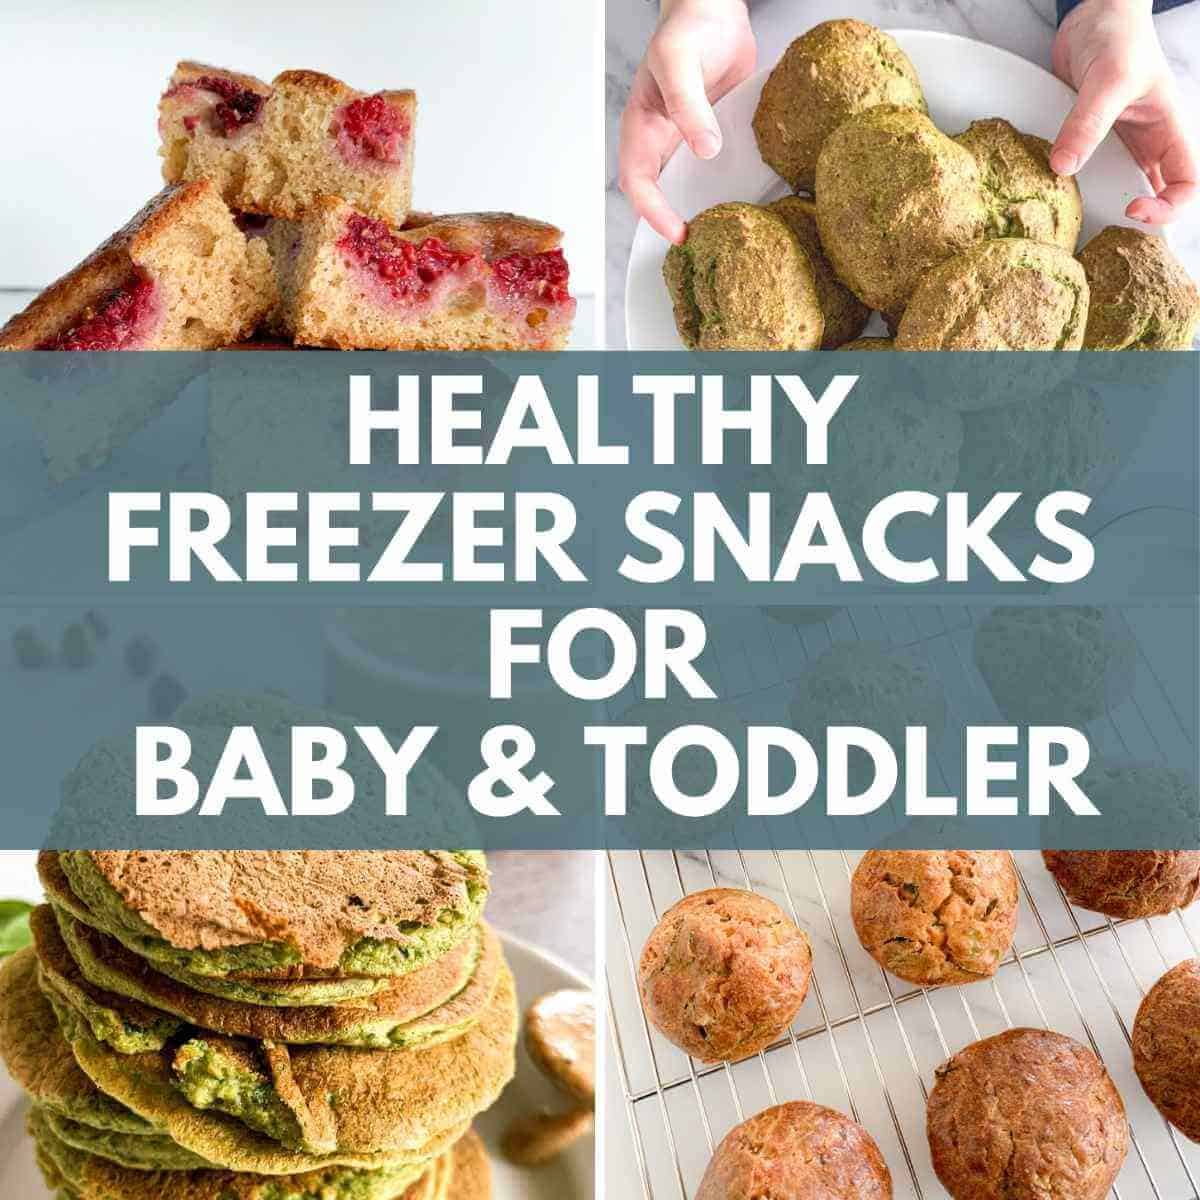 Freezer Snacks for Kids title image